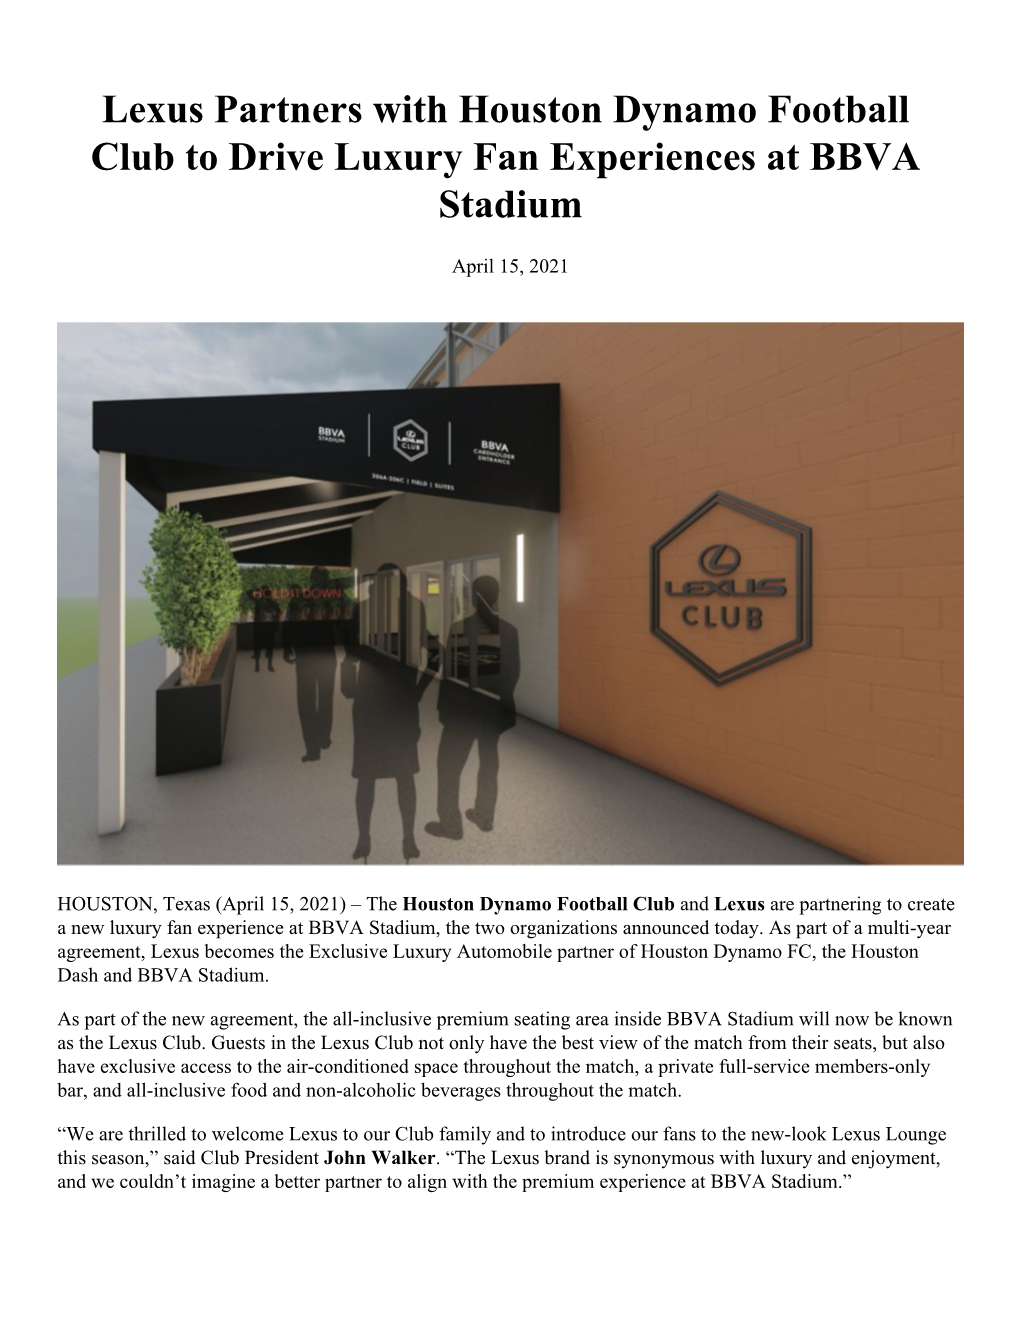 Lexus Partners with Houston Dynamo Football Club to Drive Luxury Fan Experiences at BBVA Stadium